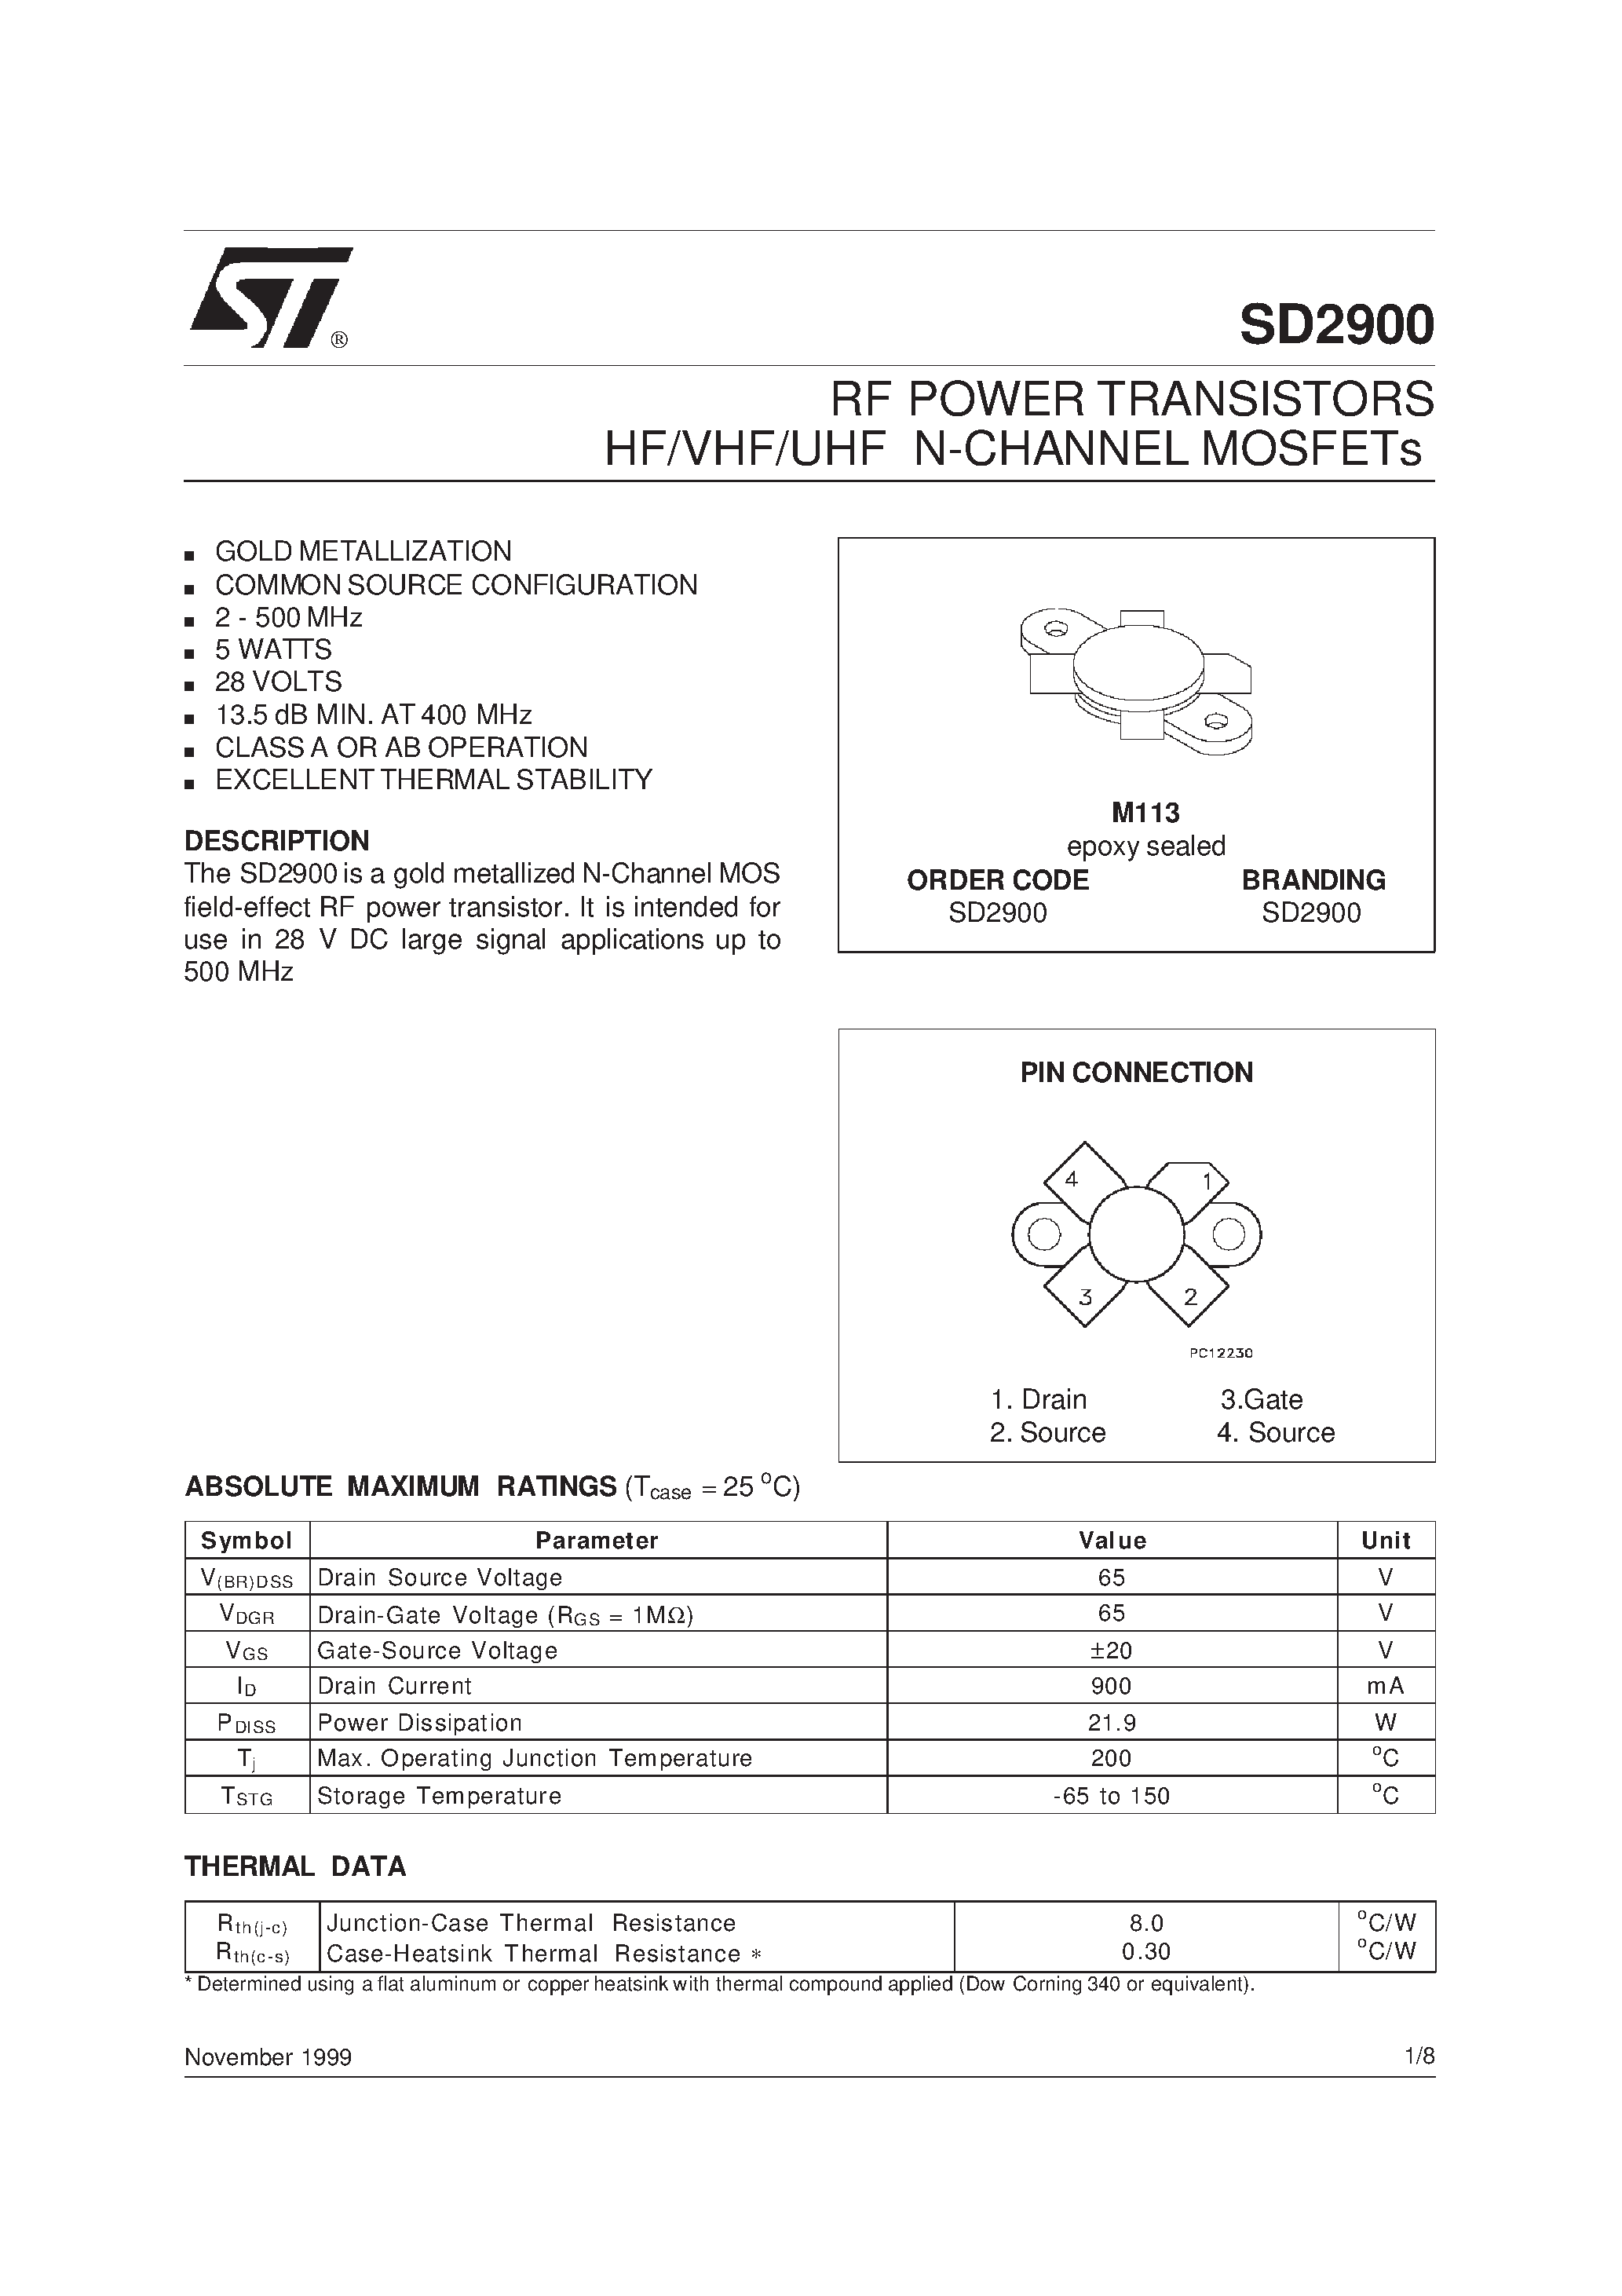 Datasheet SD2900 - RF POWER TRANSISTORS HF/VHF/UHF N-CHANNEL MOSFETs page 1